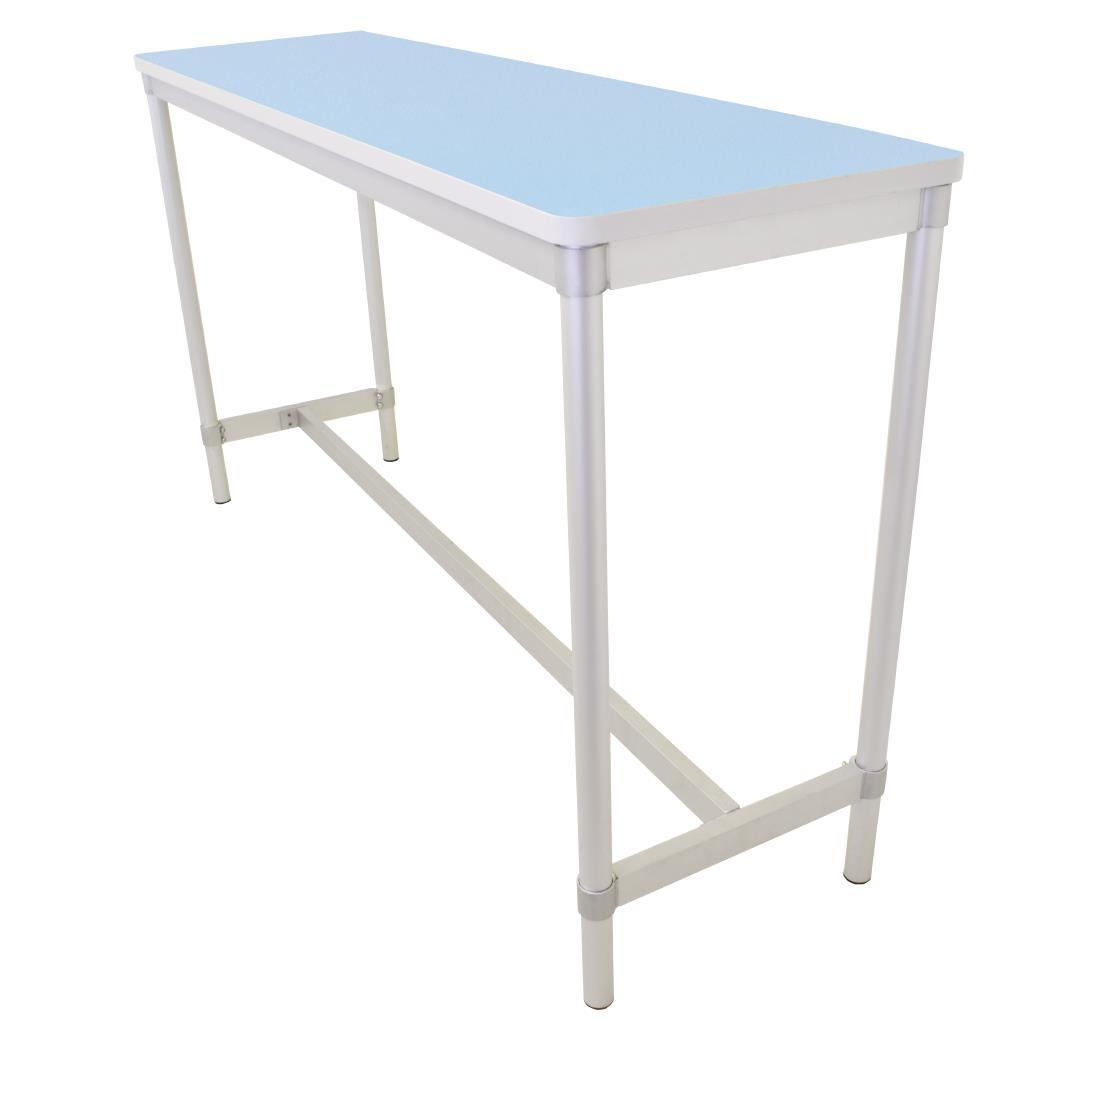 Gopak Enviro Indoor Pastel Blue Rectangle Poseur Table 1200mm - DG131-PB  - 1